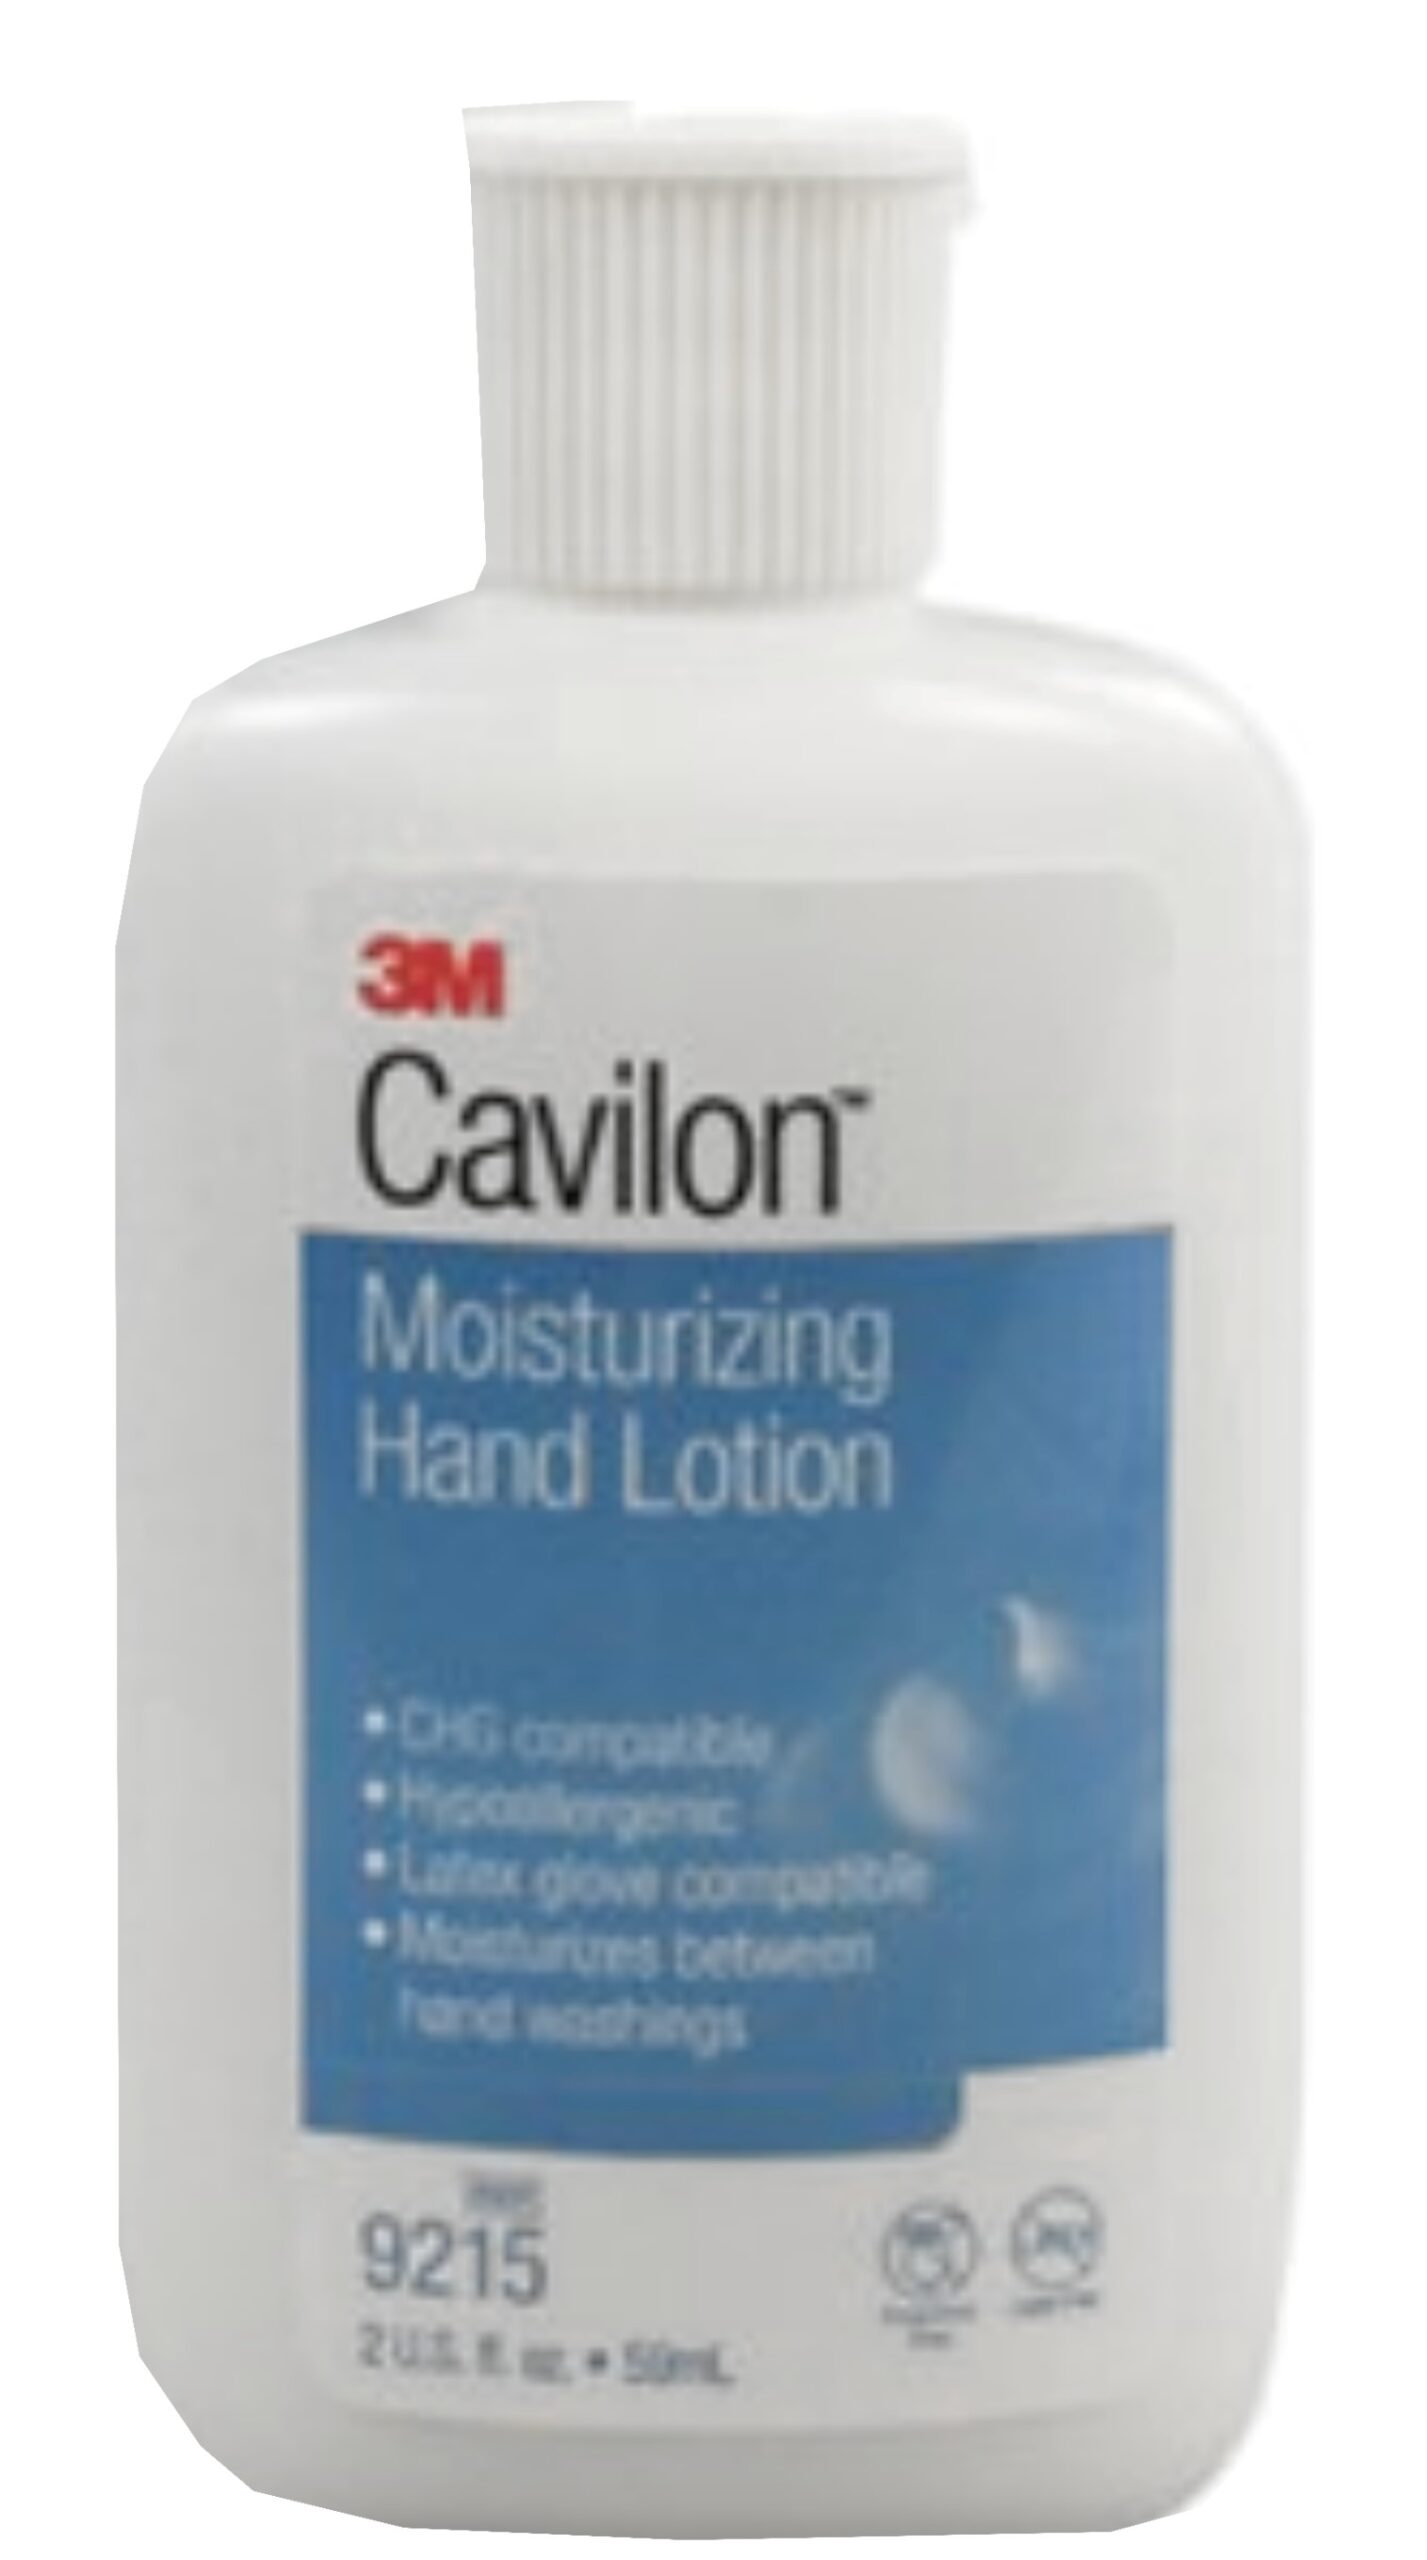 3M Cavilon™ Moisturizing Hand Lotion